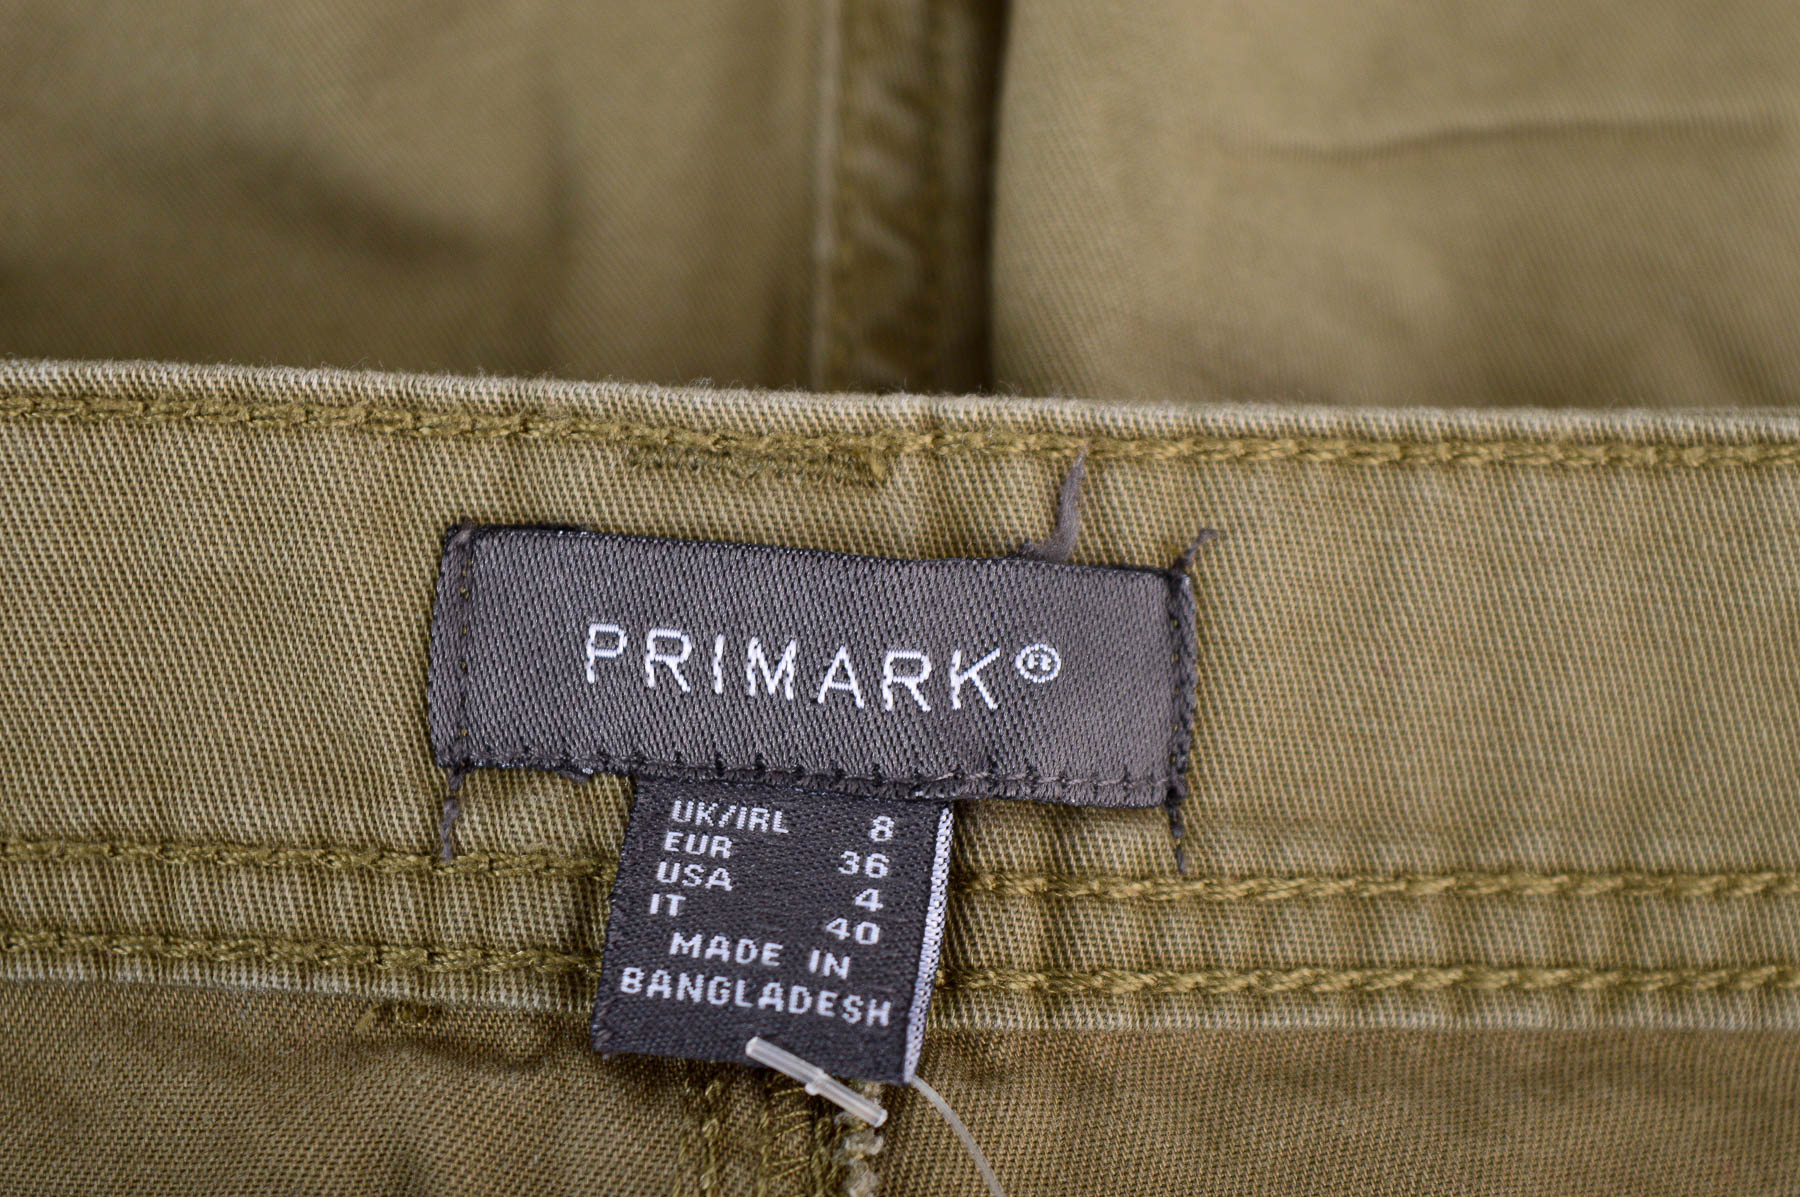 Women's trousers - PRIMARK - 2